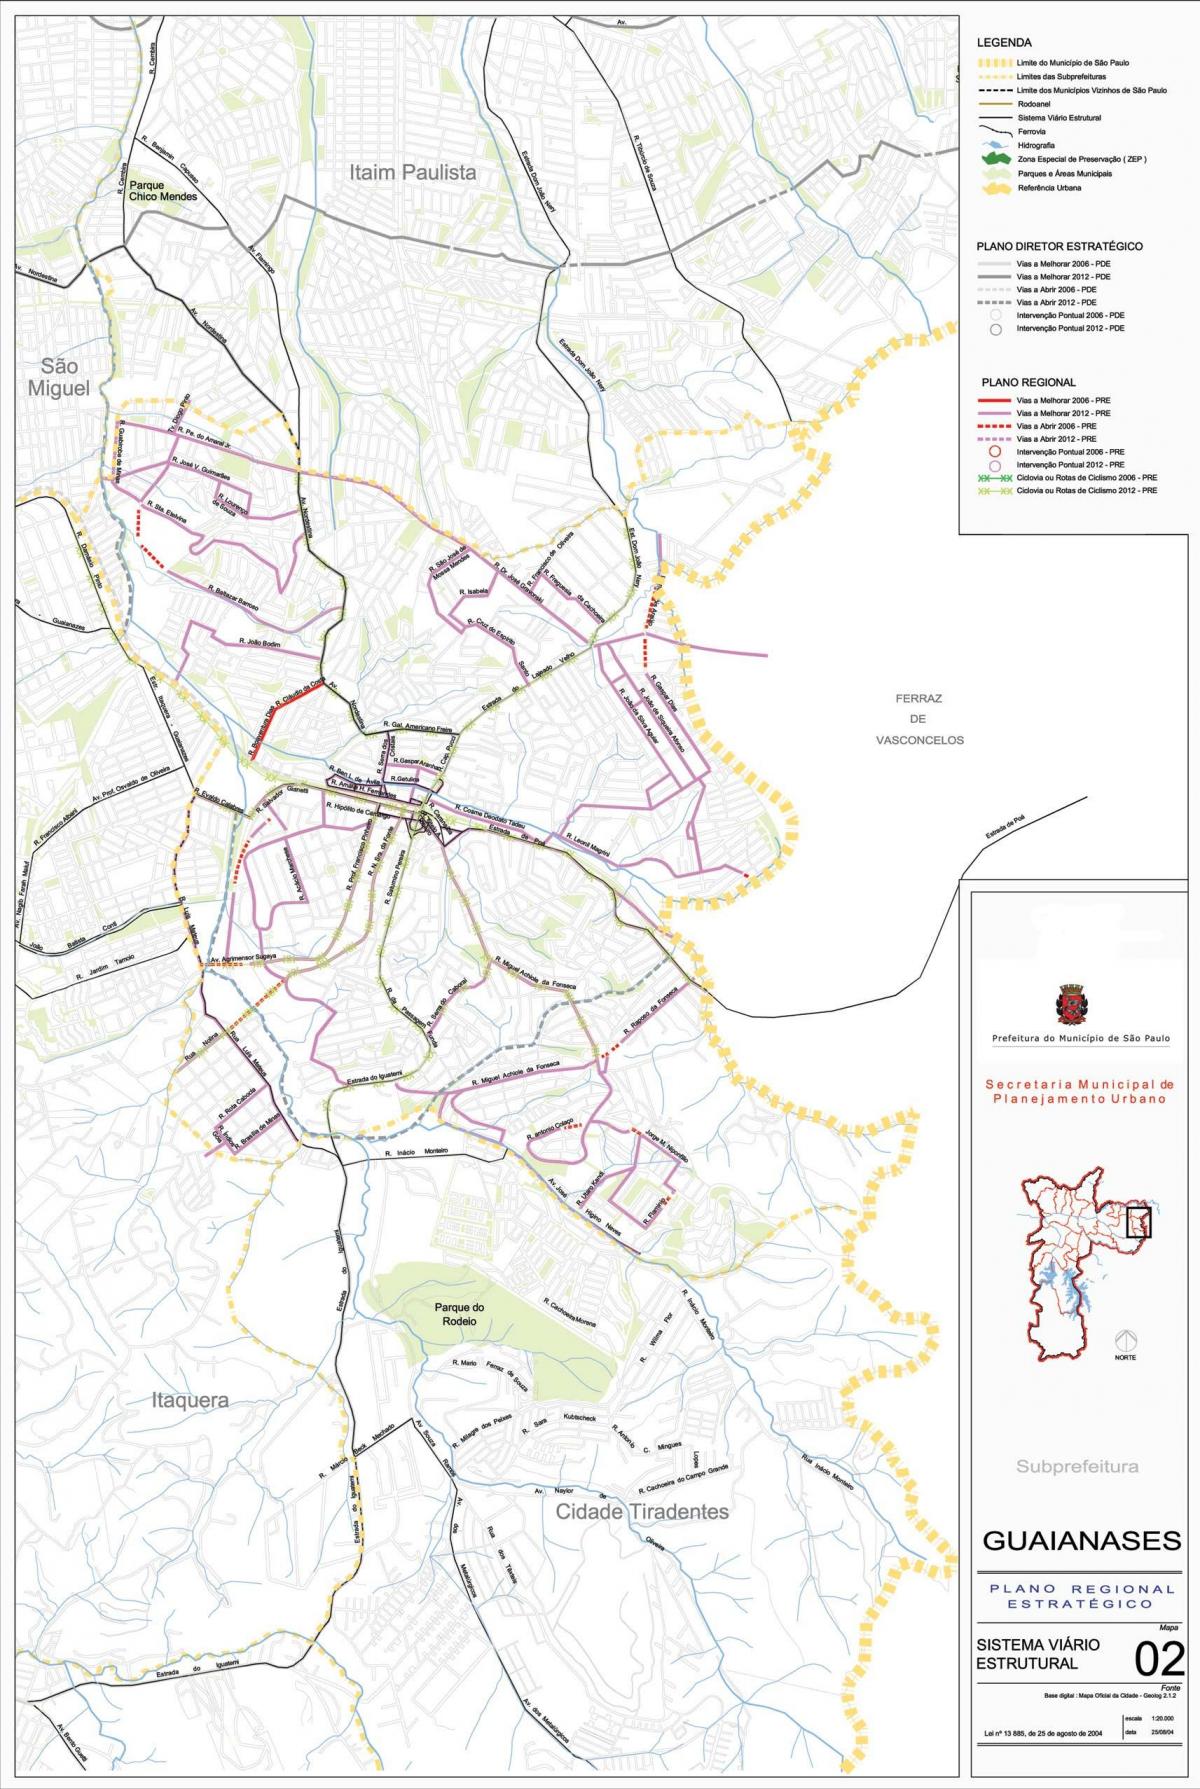 Mapa Guaianases São Paulo - Errepideak